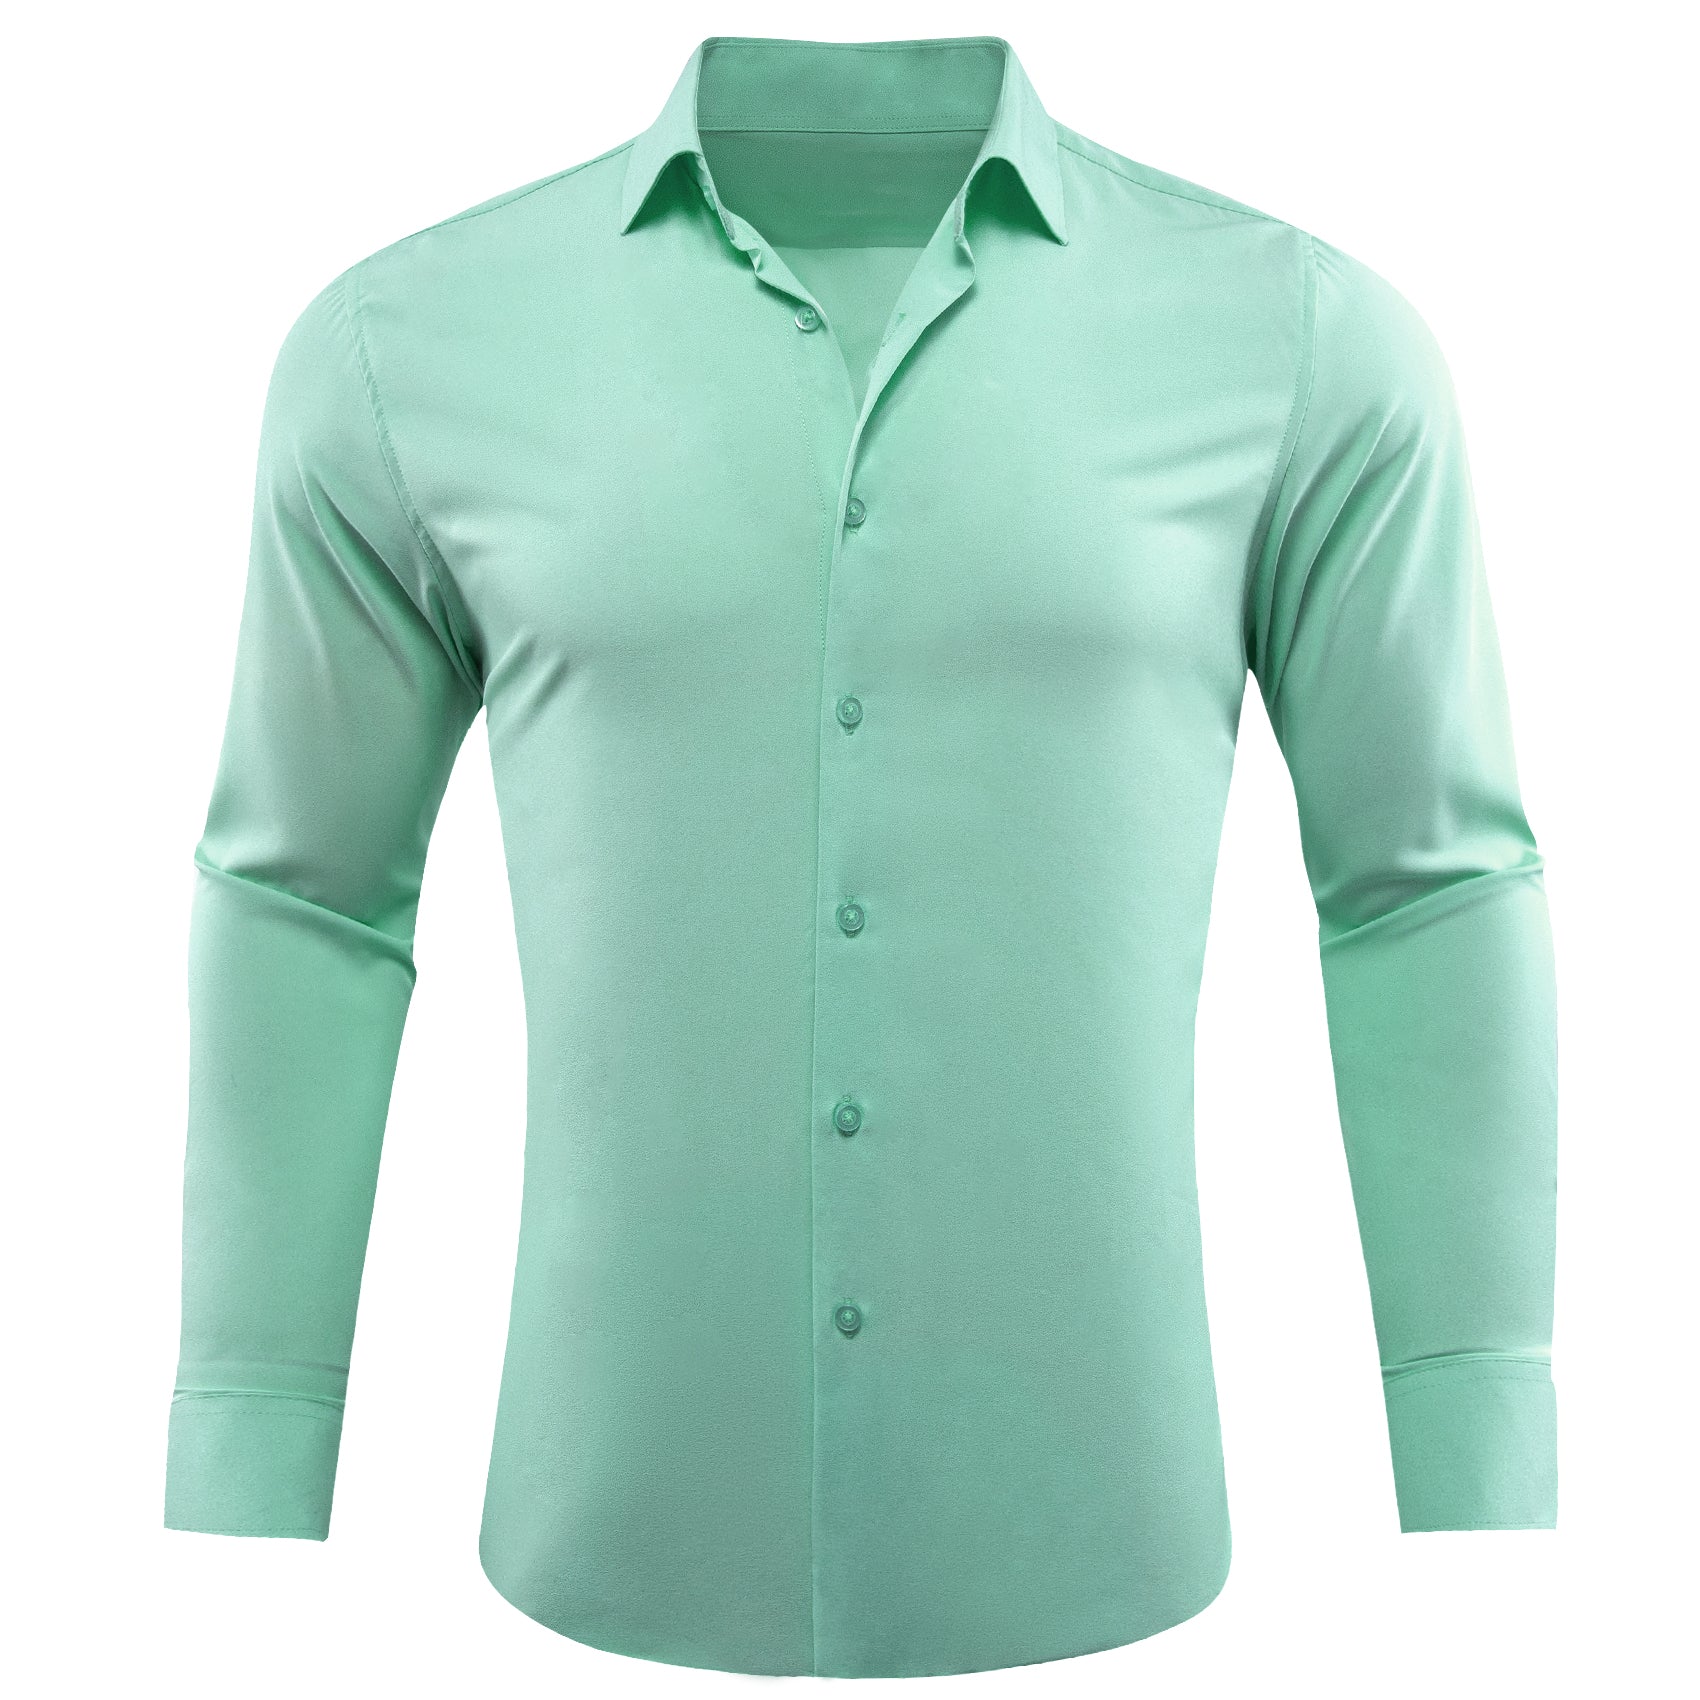 Barry.wang Aqua Solid Silk Shirt